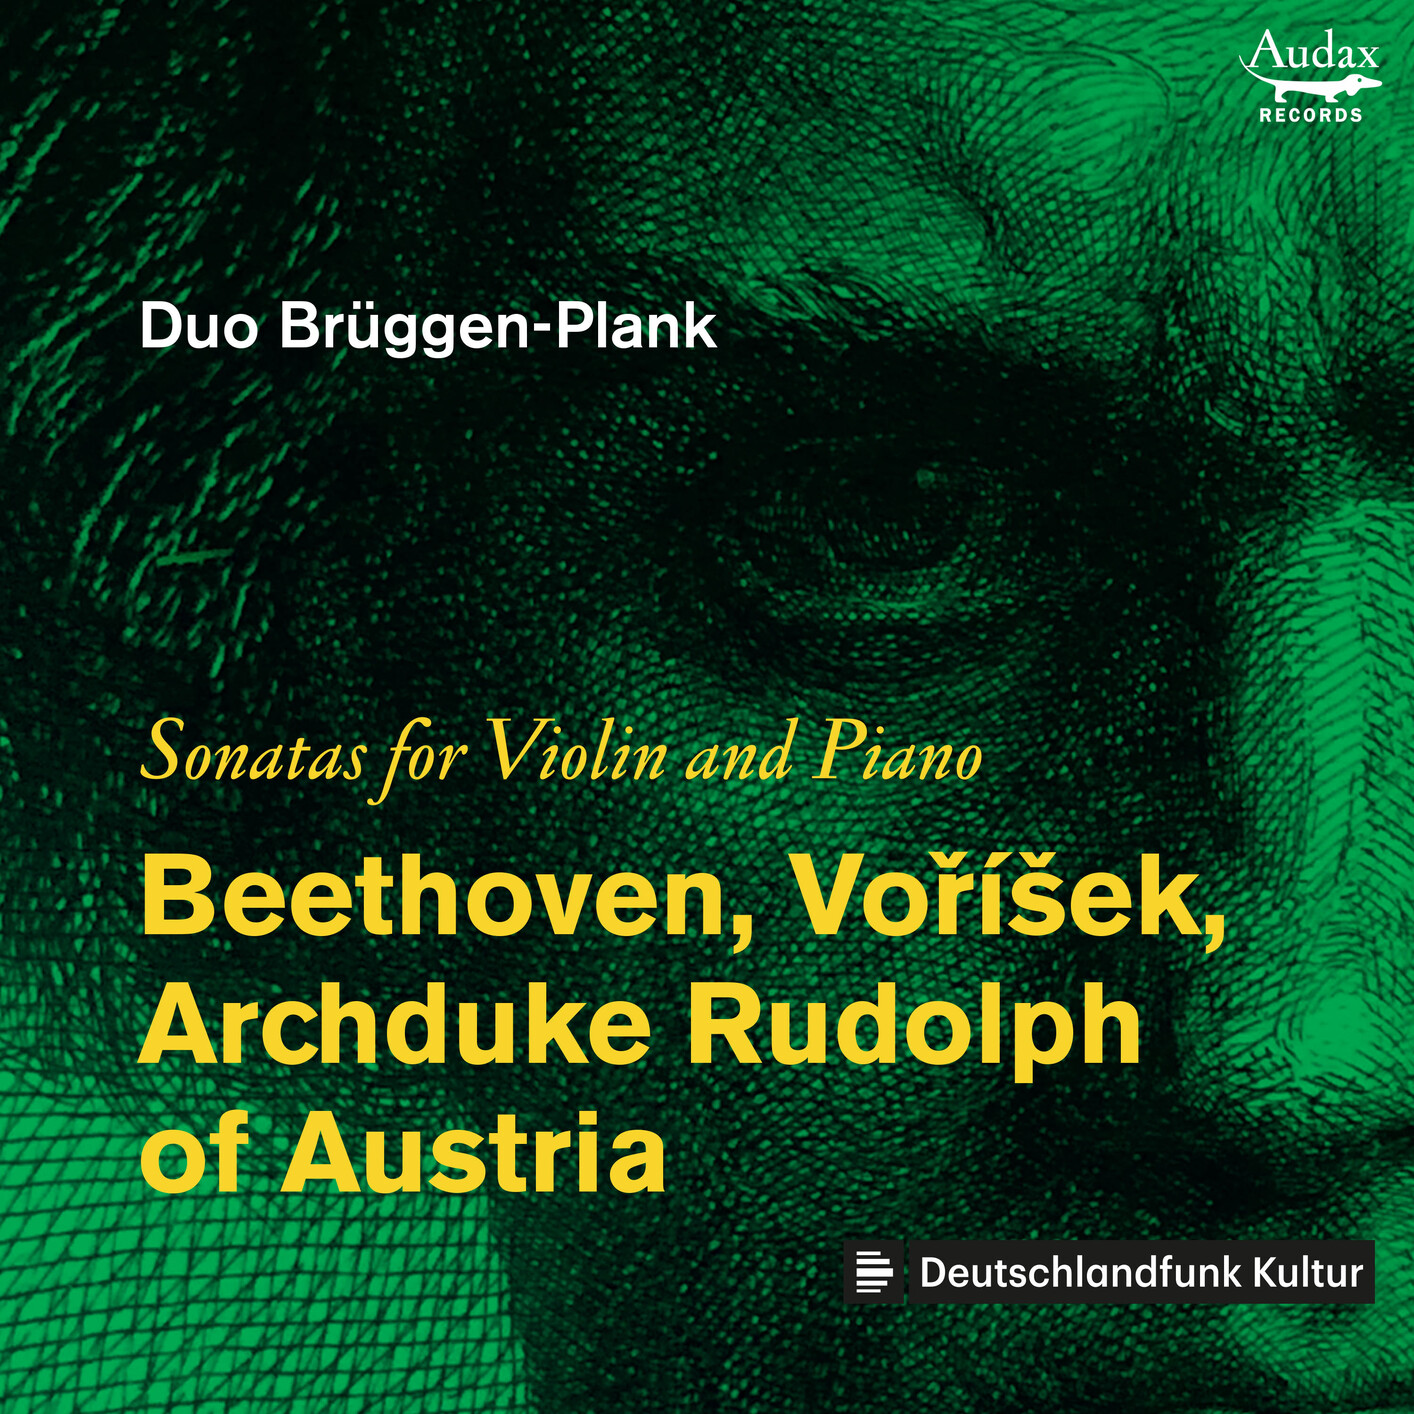 Duo Bruggen-Plank - Beethoven, Vorisek, Archduke & Rudolph of Austria - Sonatas for Violin and Piano (2021) [FLAC 24bit/48kHz]